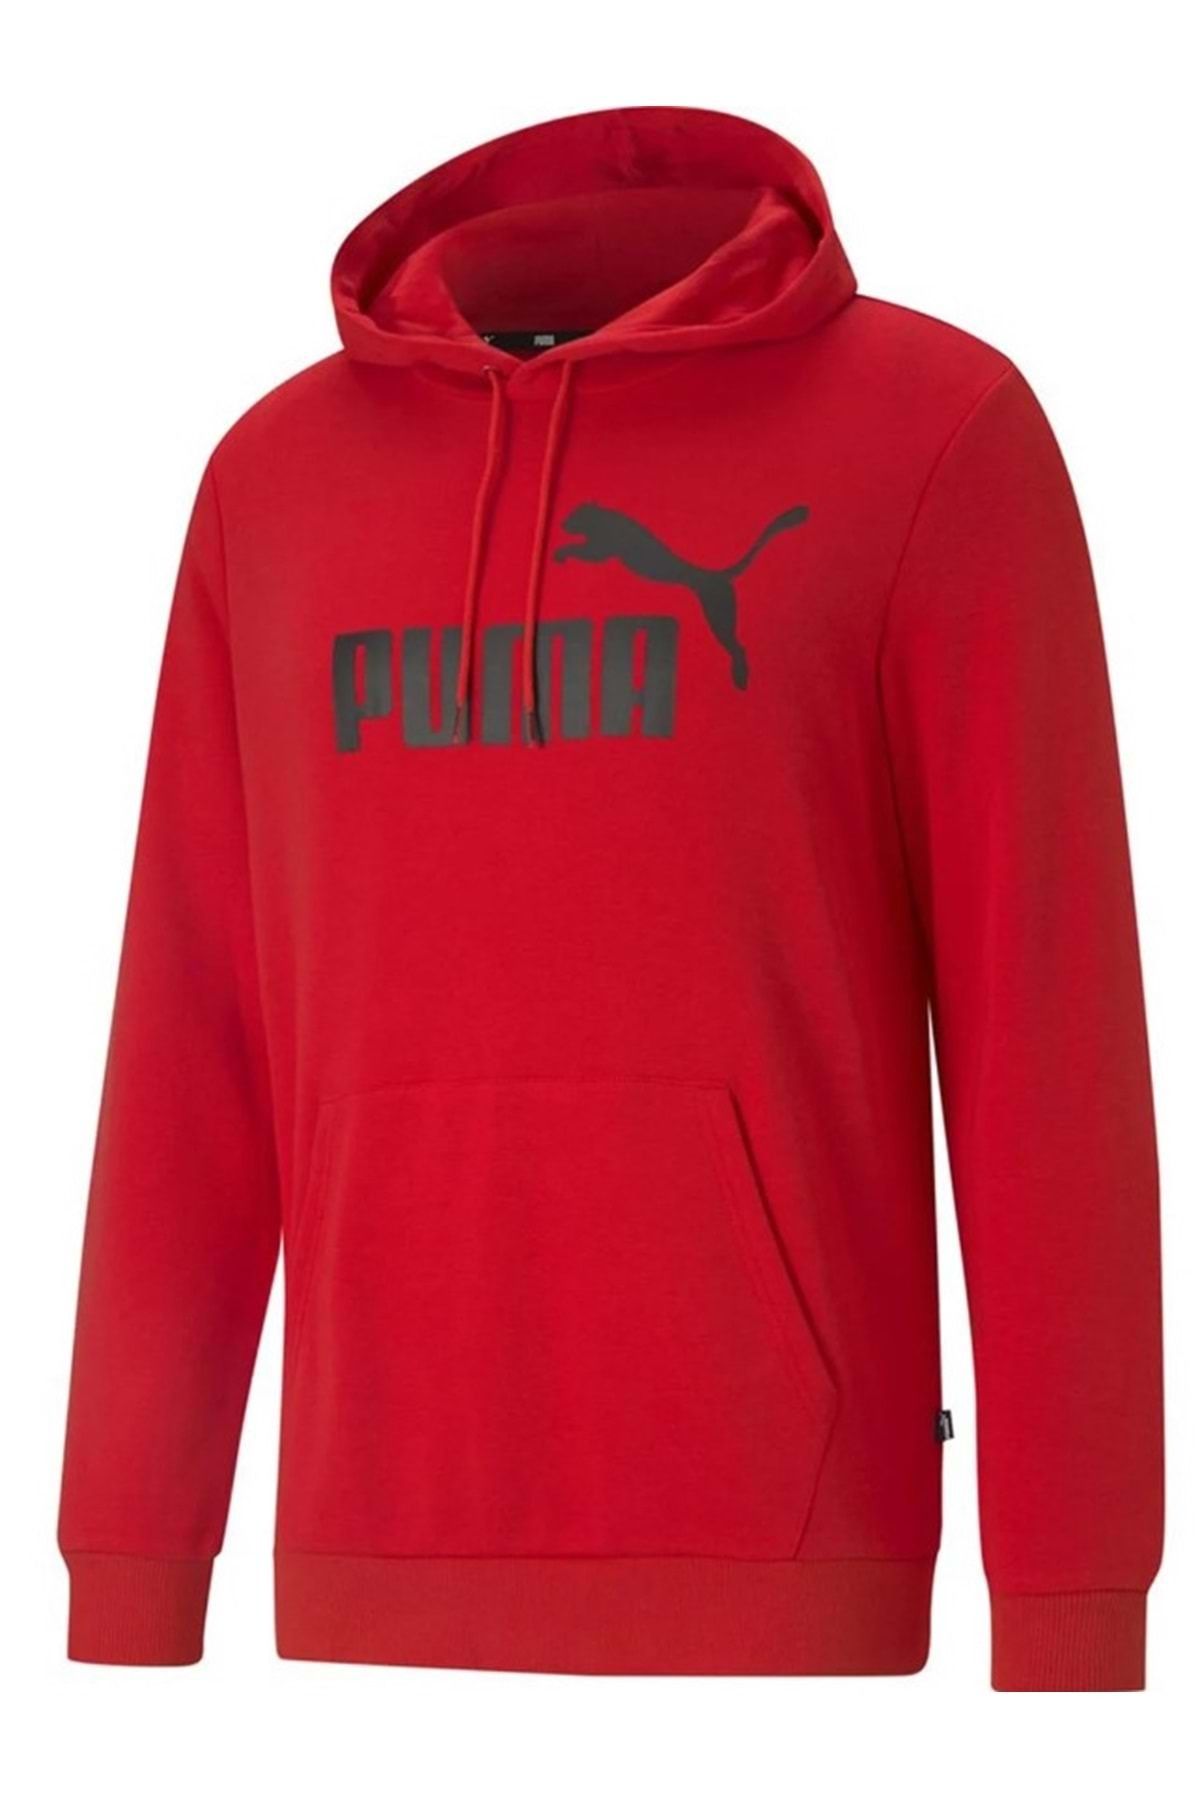 Puma 586688 Ess Big Logo Hoodie Erkek Kapüşonlu Sweatshirt Kırmızı